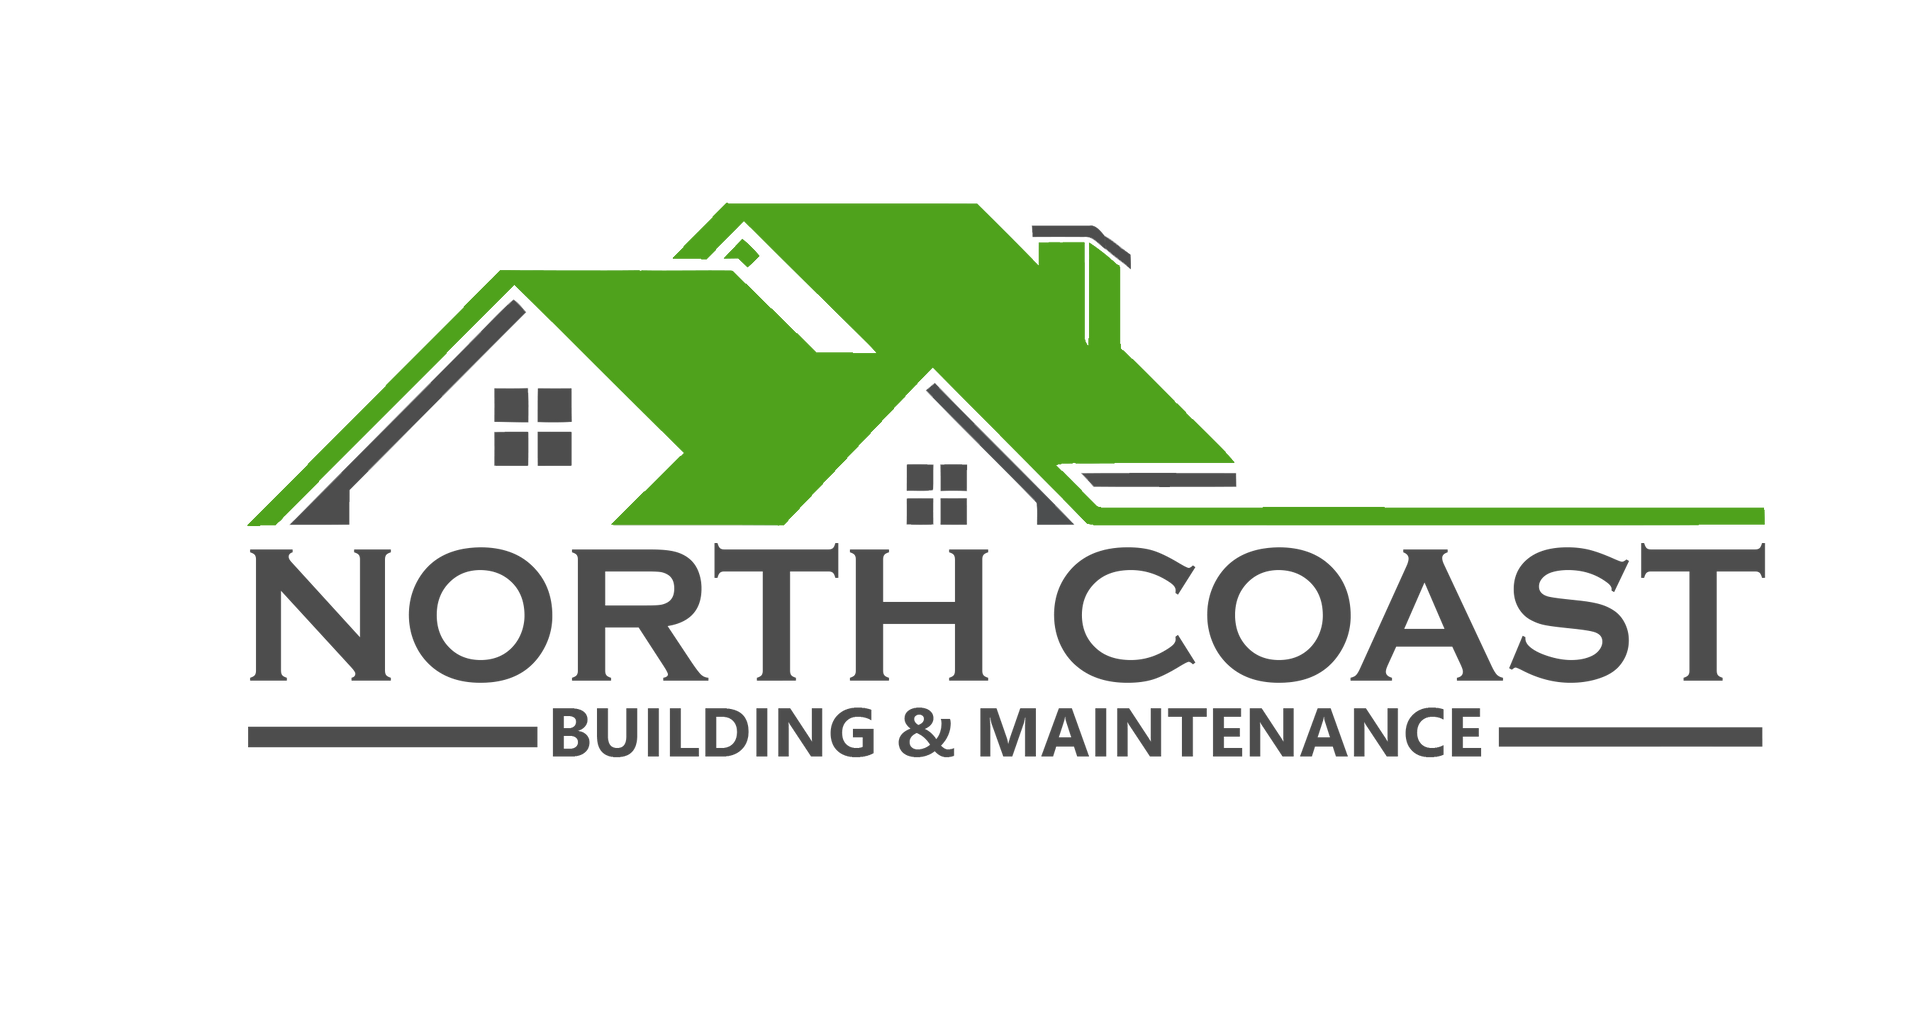 North Coast Building & Maintenance: We Provide Premium Building Services in Lismore